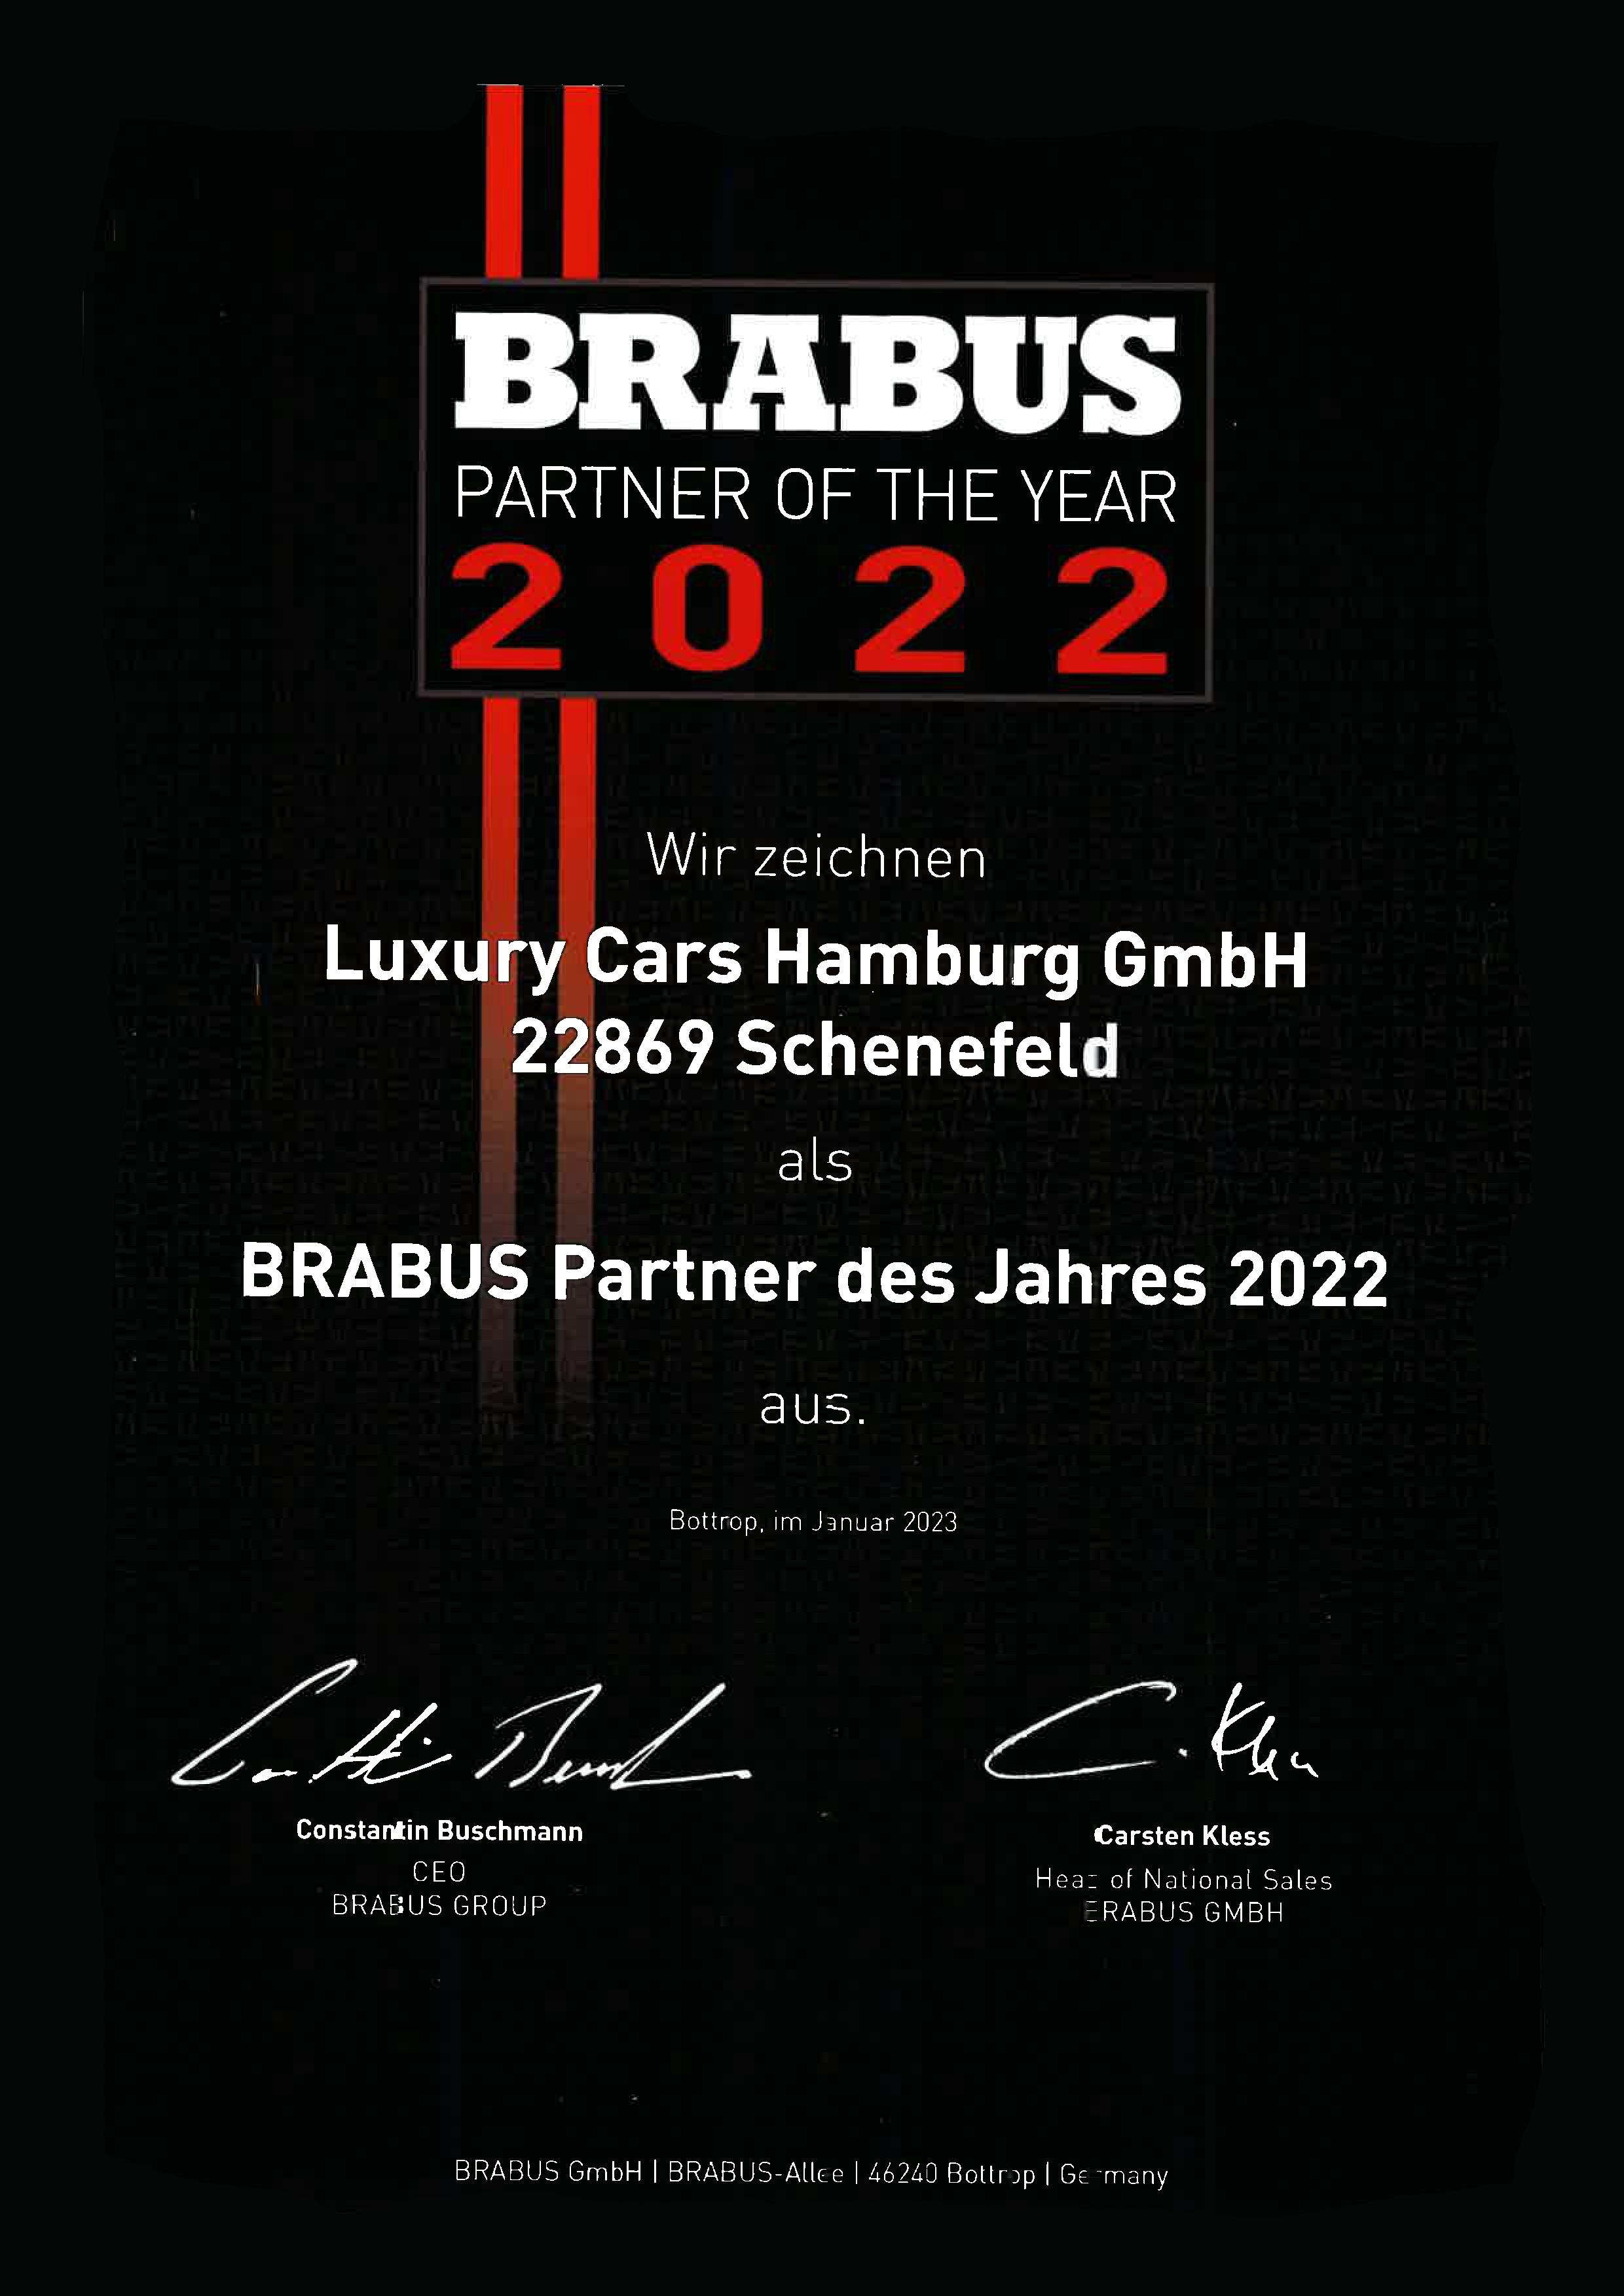 BRABUS partner of the year 2022